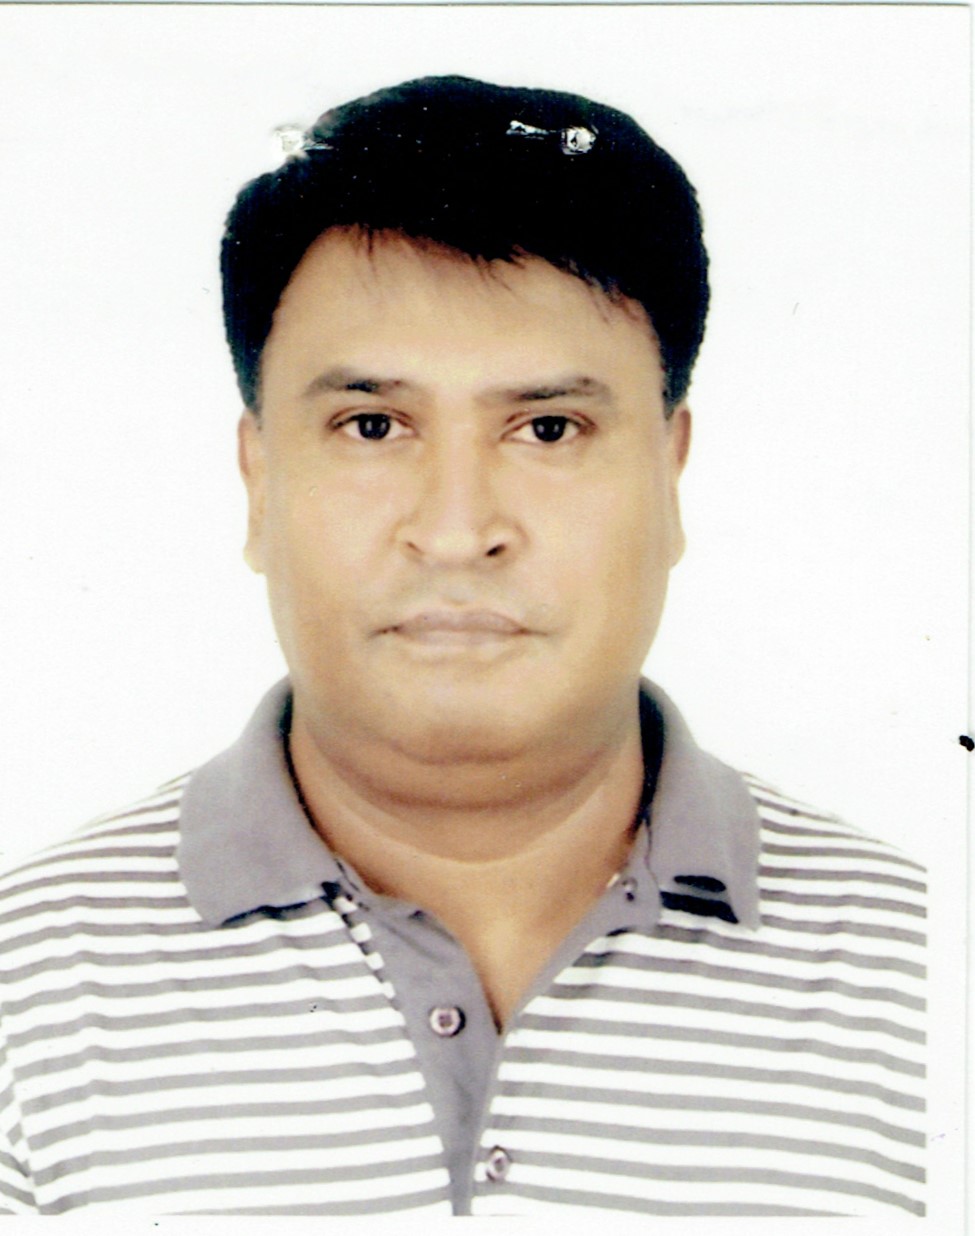 Mostafizur Rahman Faruk